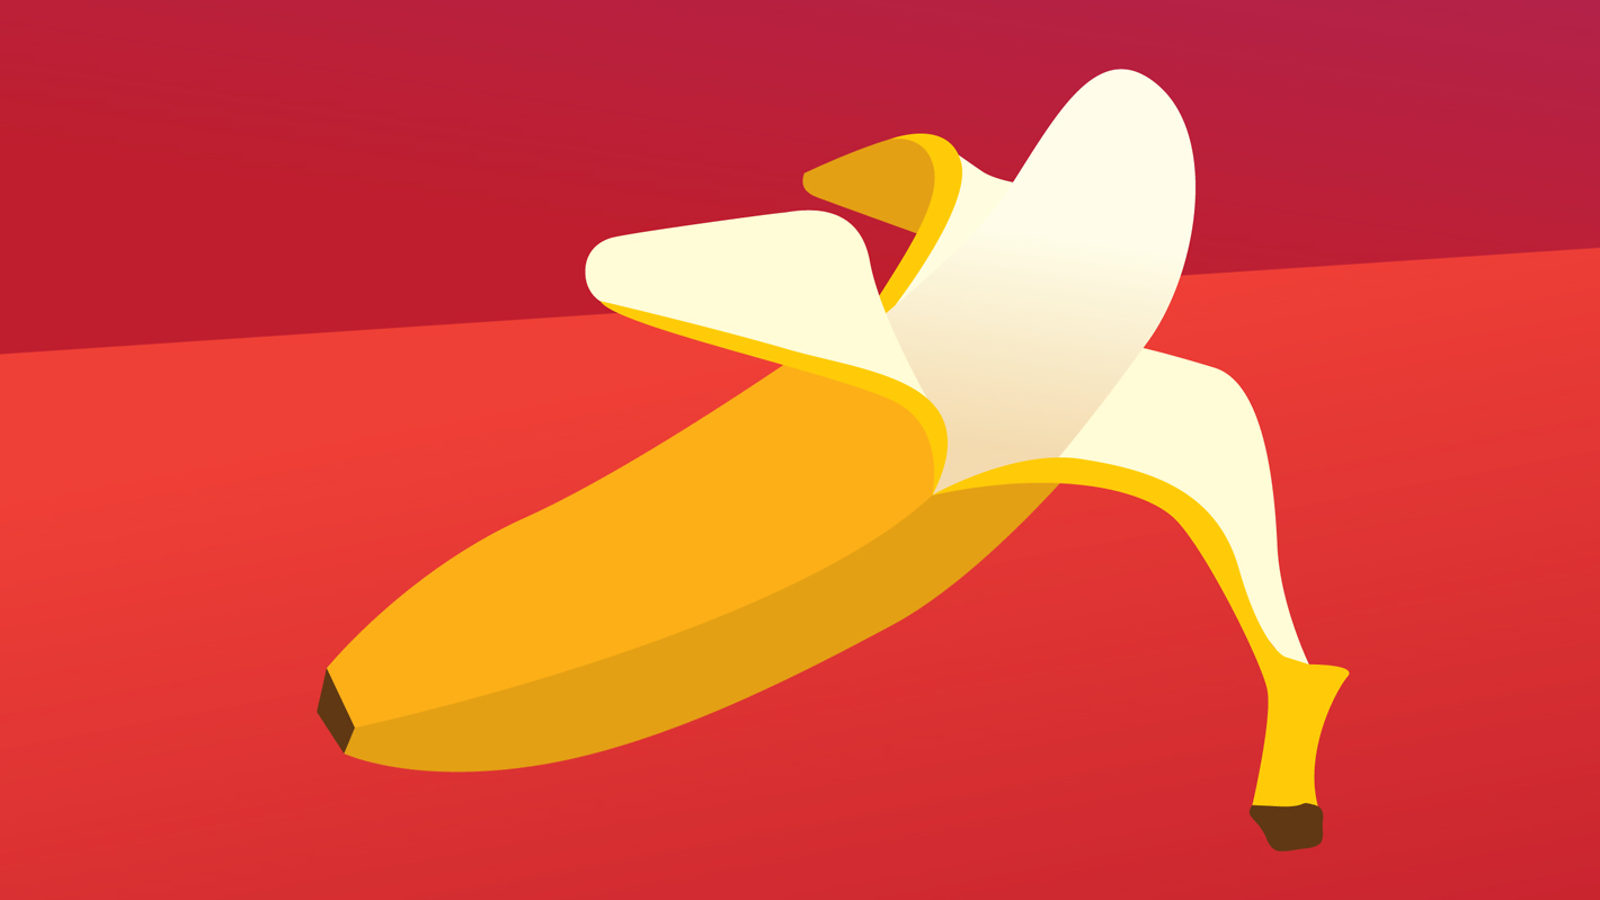 Illustration of banana on red background